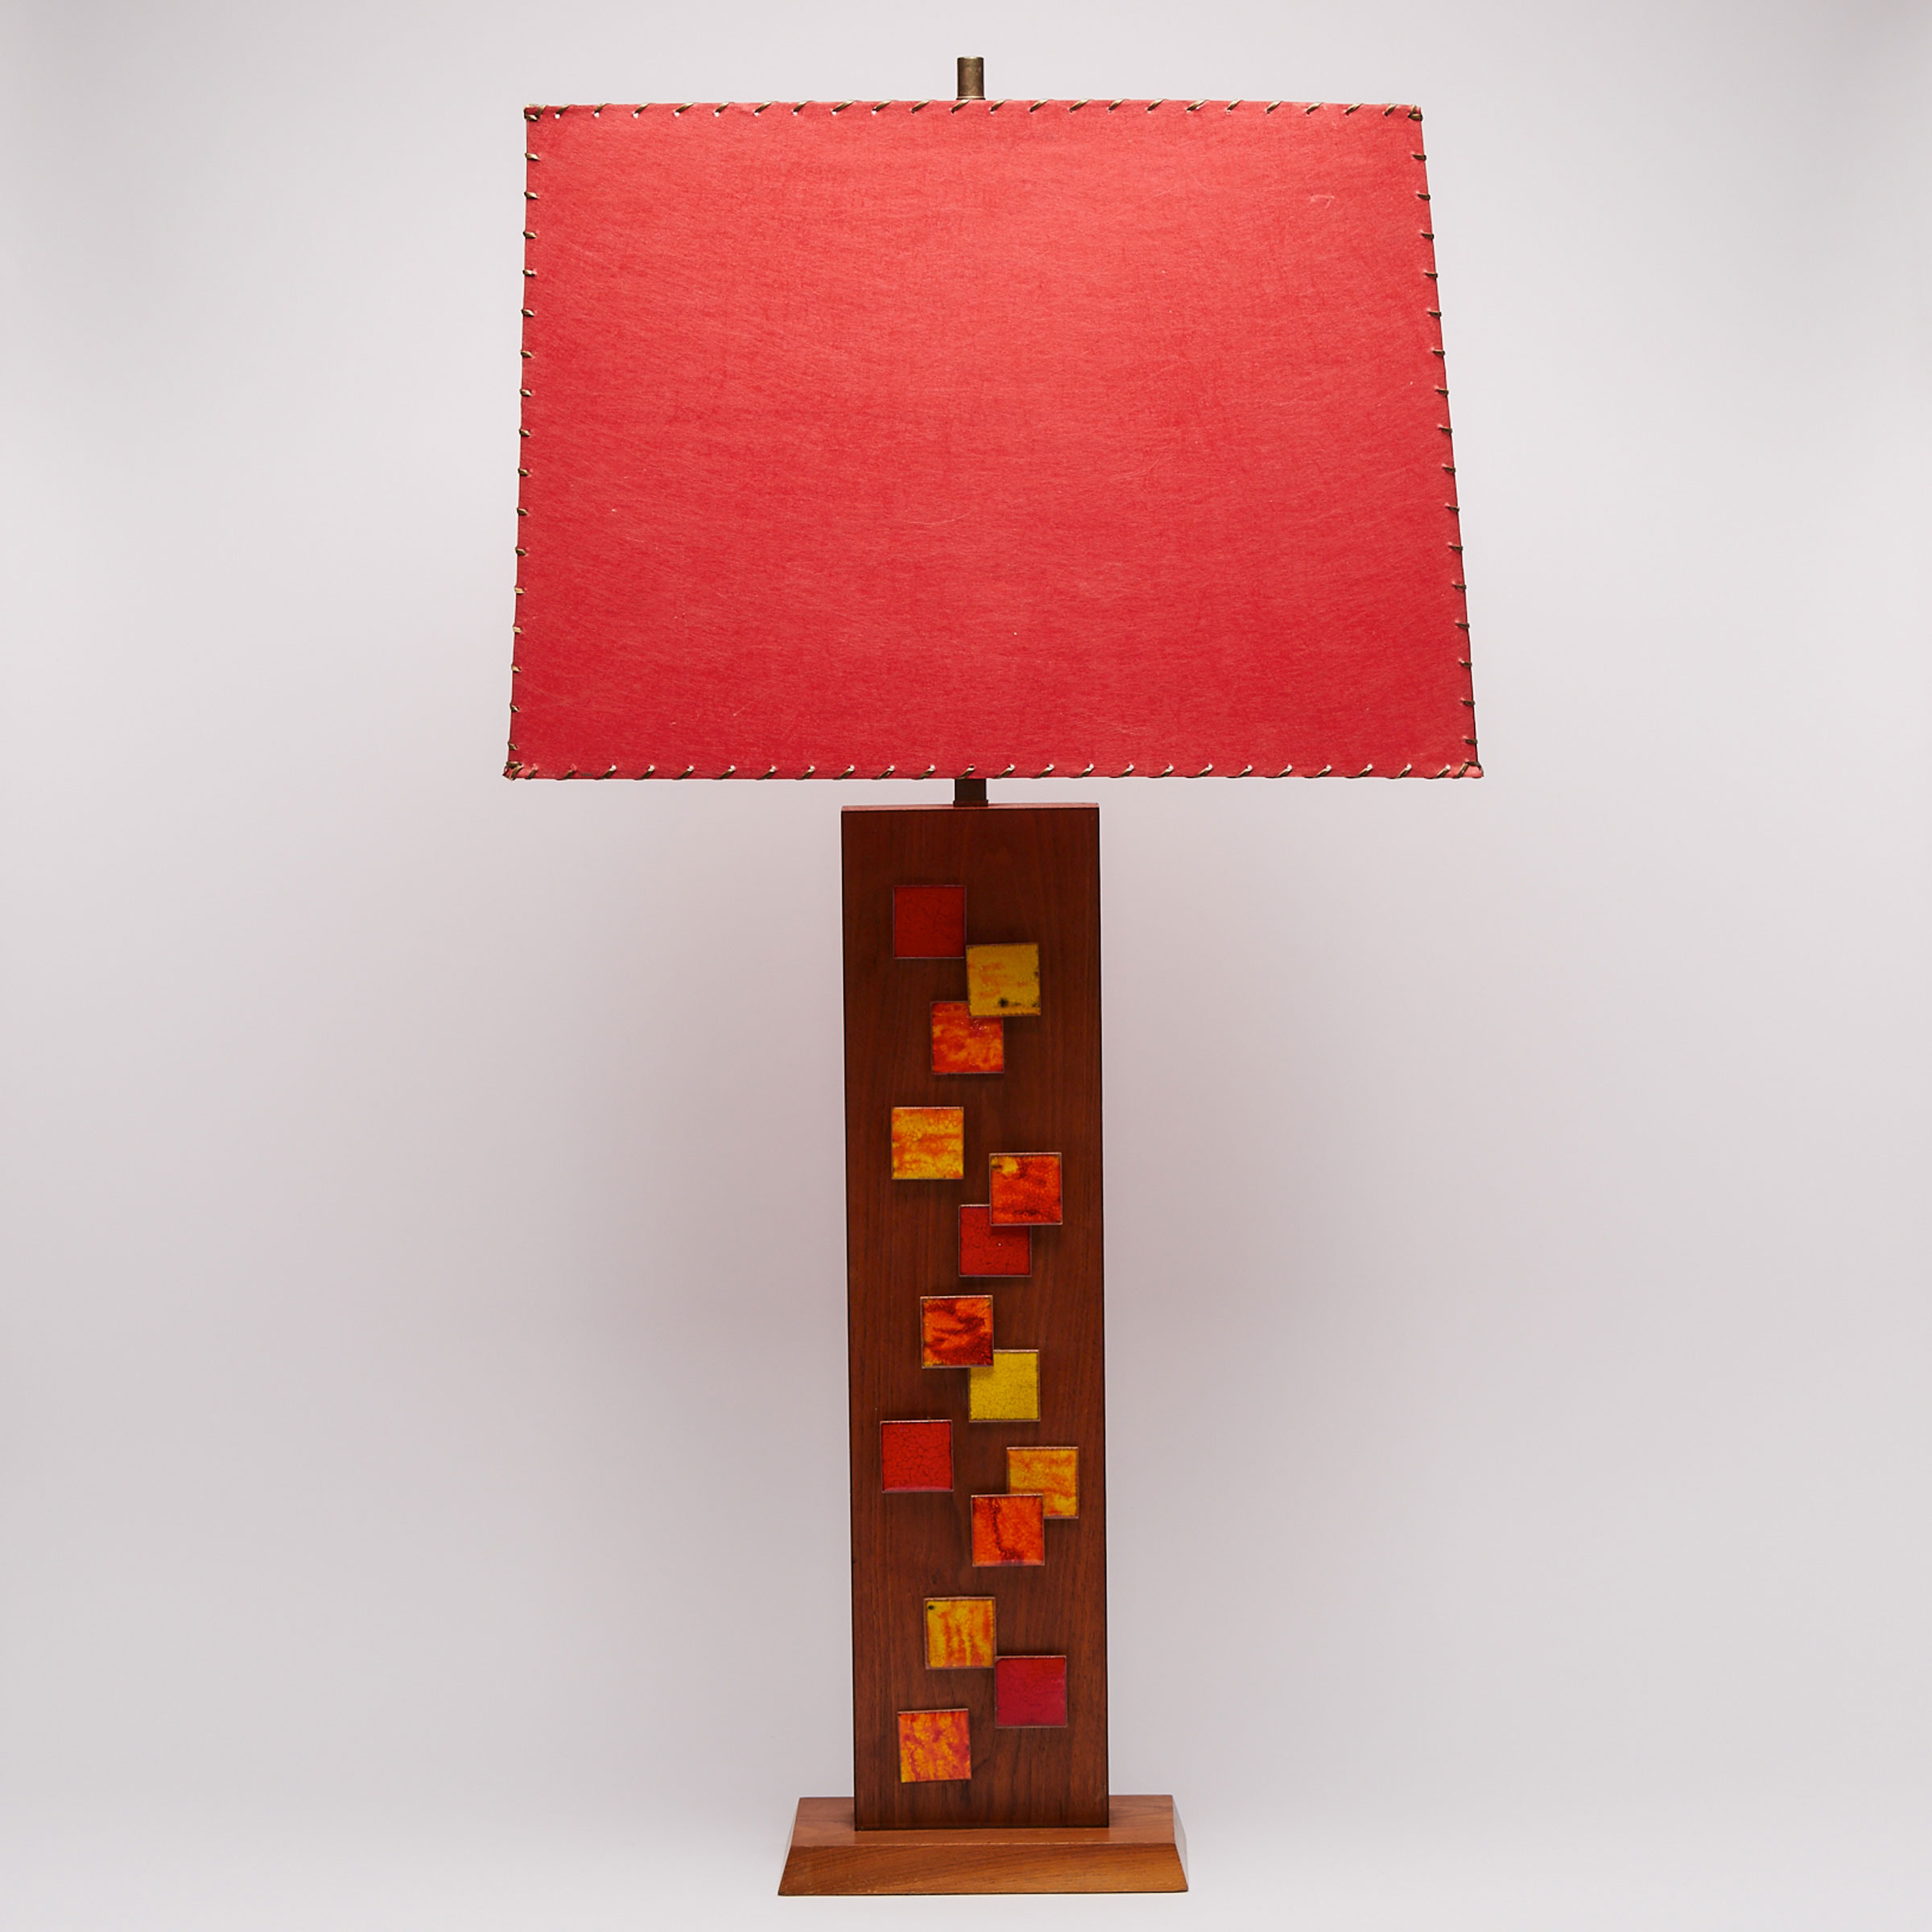 Harris Strong (American, 1920-2006) Large Mid Century Modern Ceramic Tile Mounted Walnut Table Lamp, c.1970